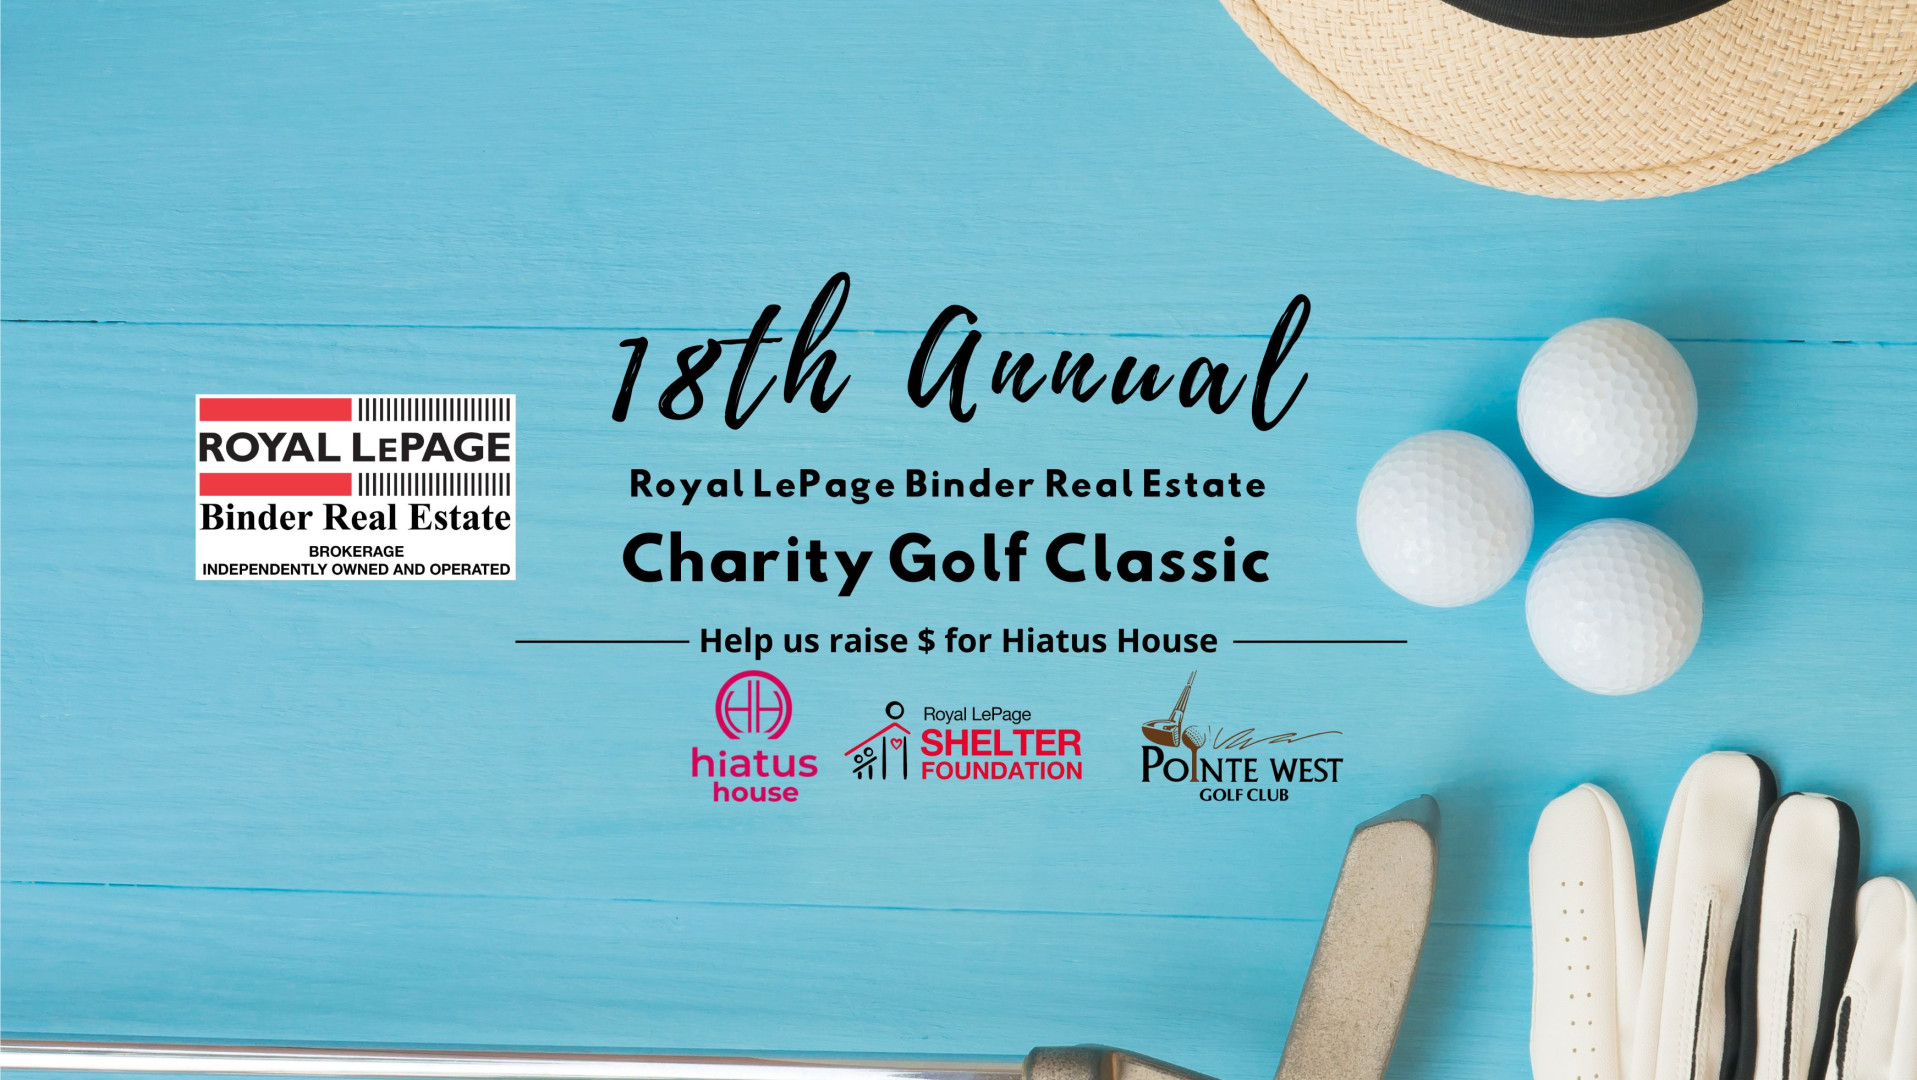 The 18th Annual RLB Charity Golf Classic for Hiatus House